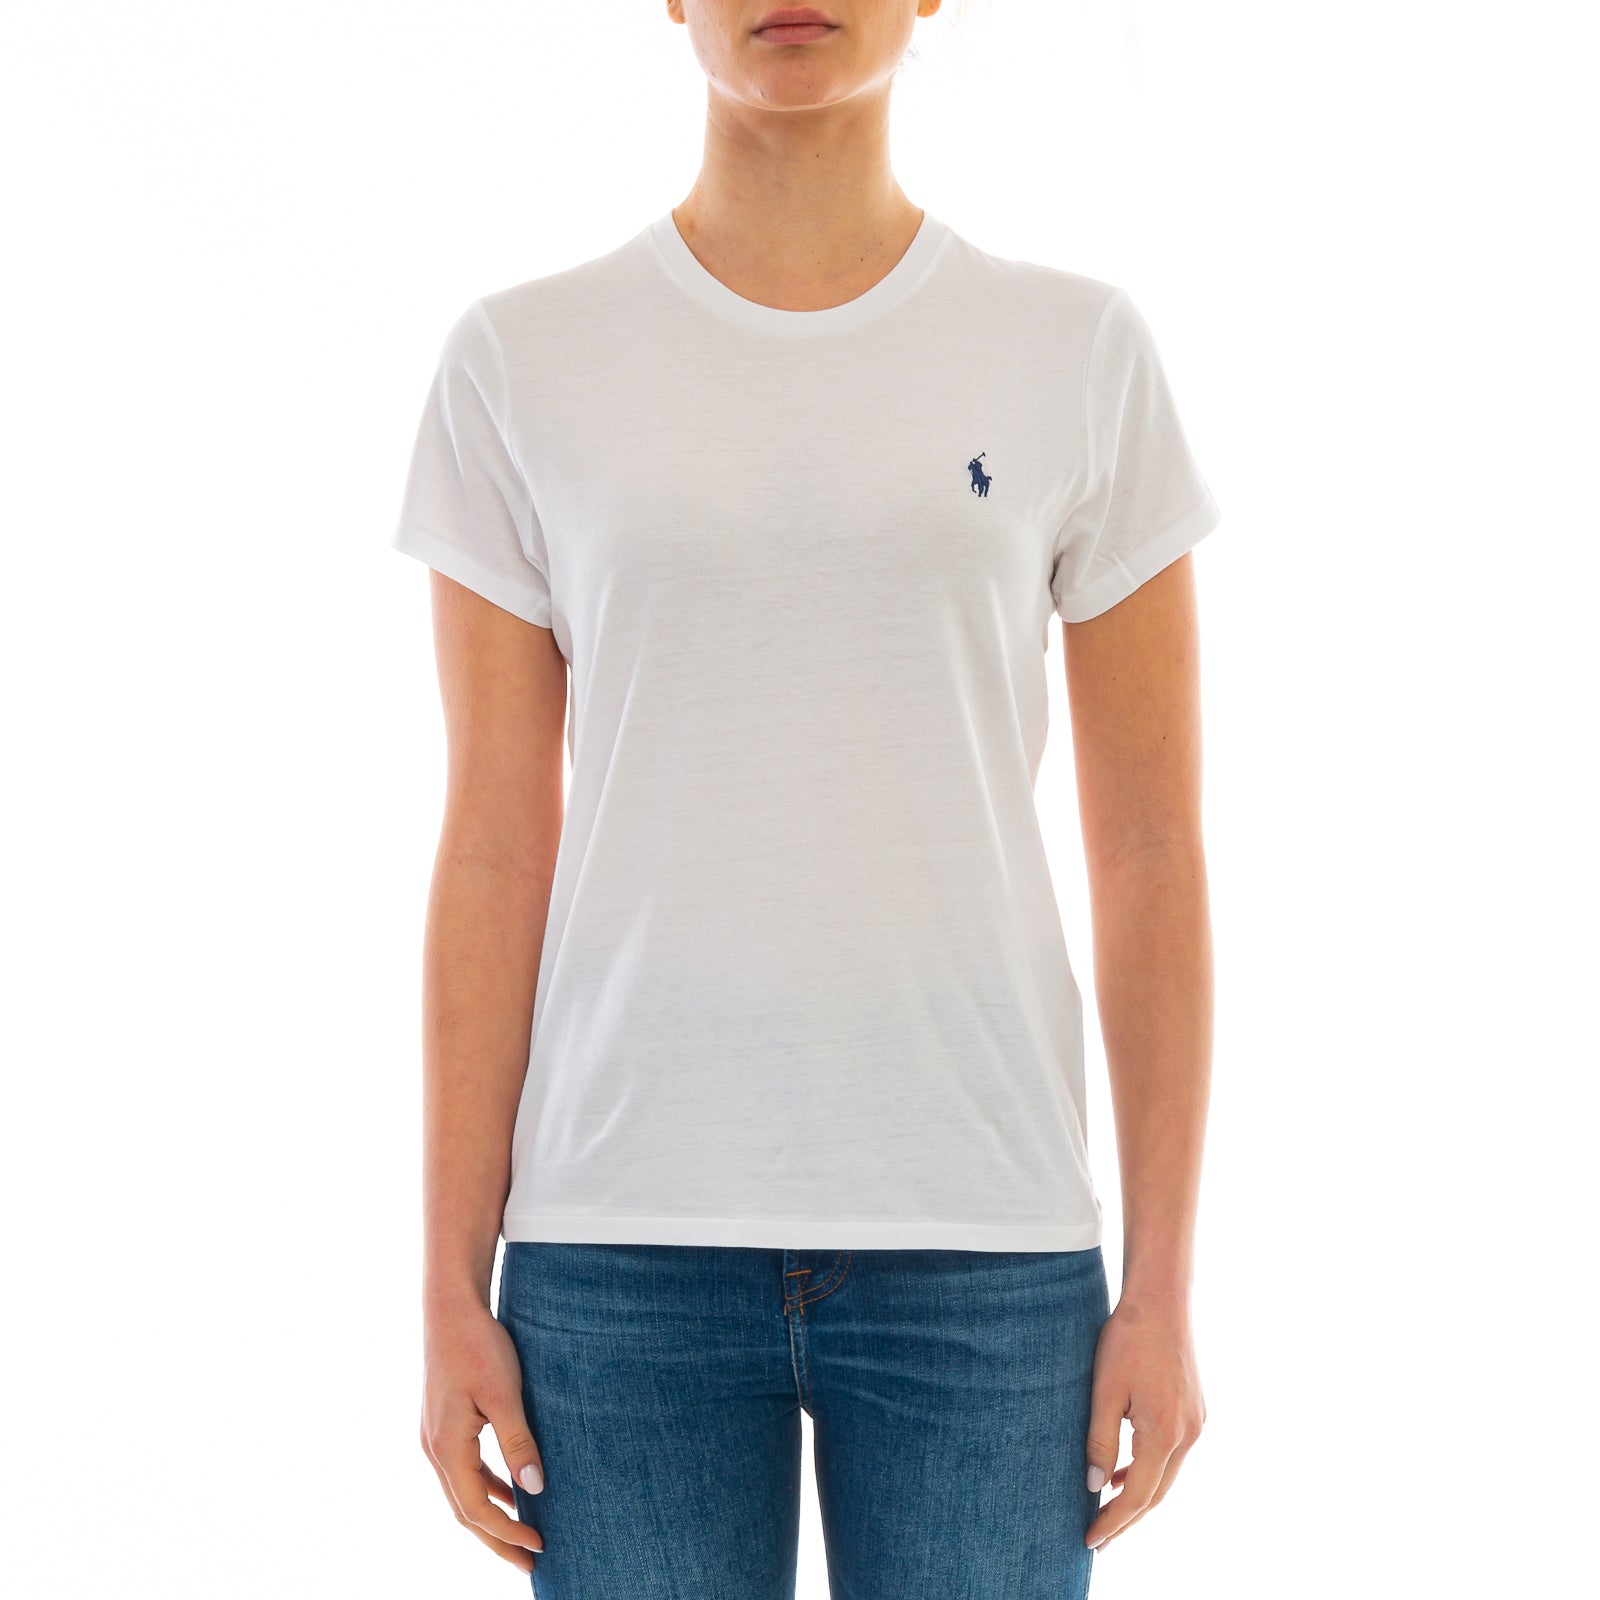 T-shirt POLO RALPH LAUREN
Bianco